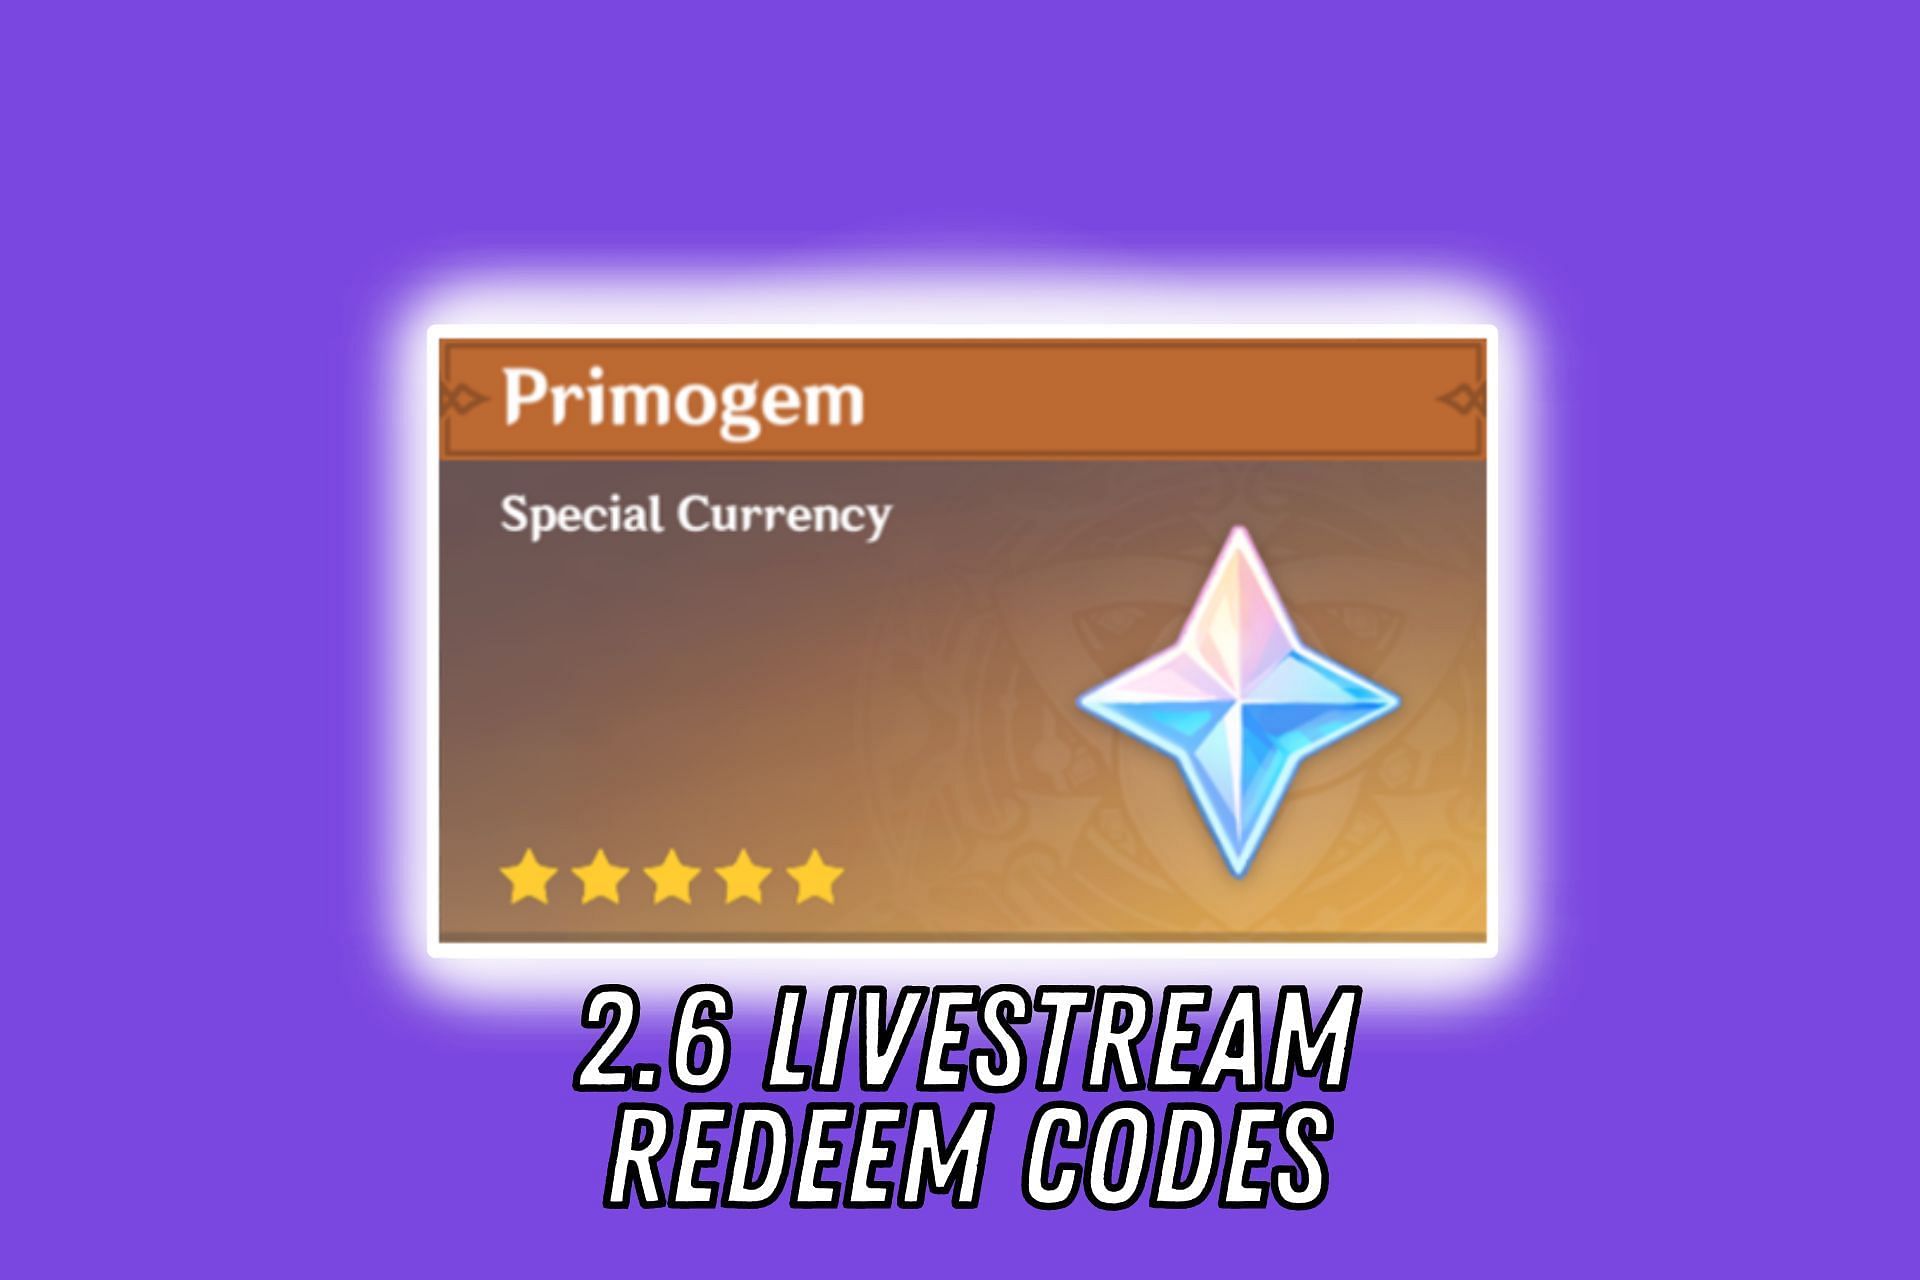 Genshin Impact 2.6 livestream redeem codes for 300 Primogems revealed (Image via Sportskeeda)